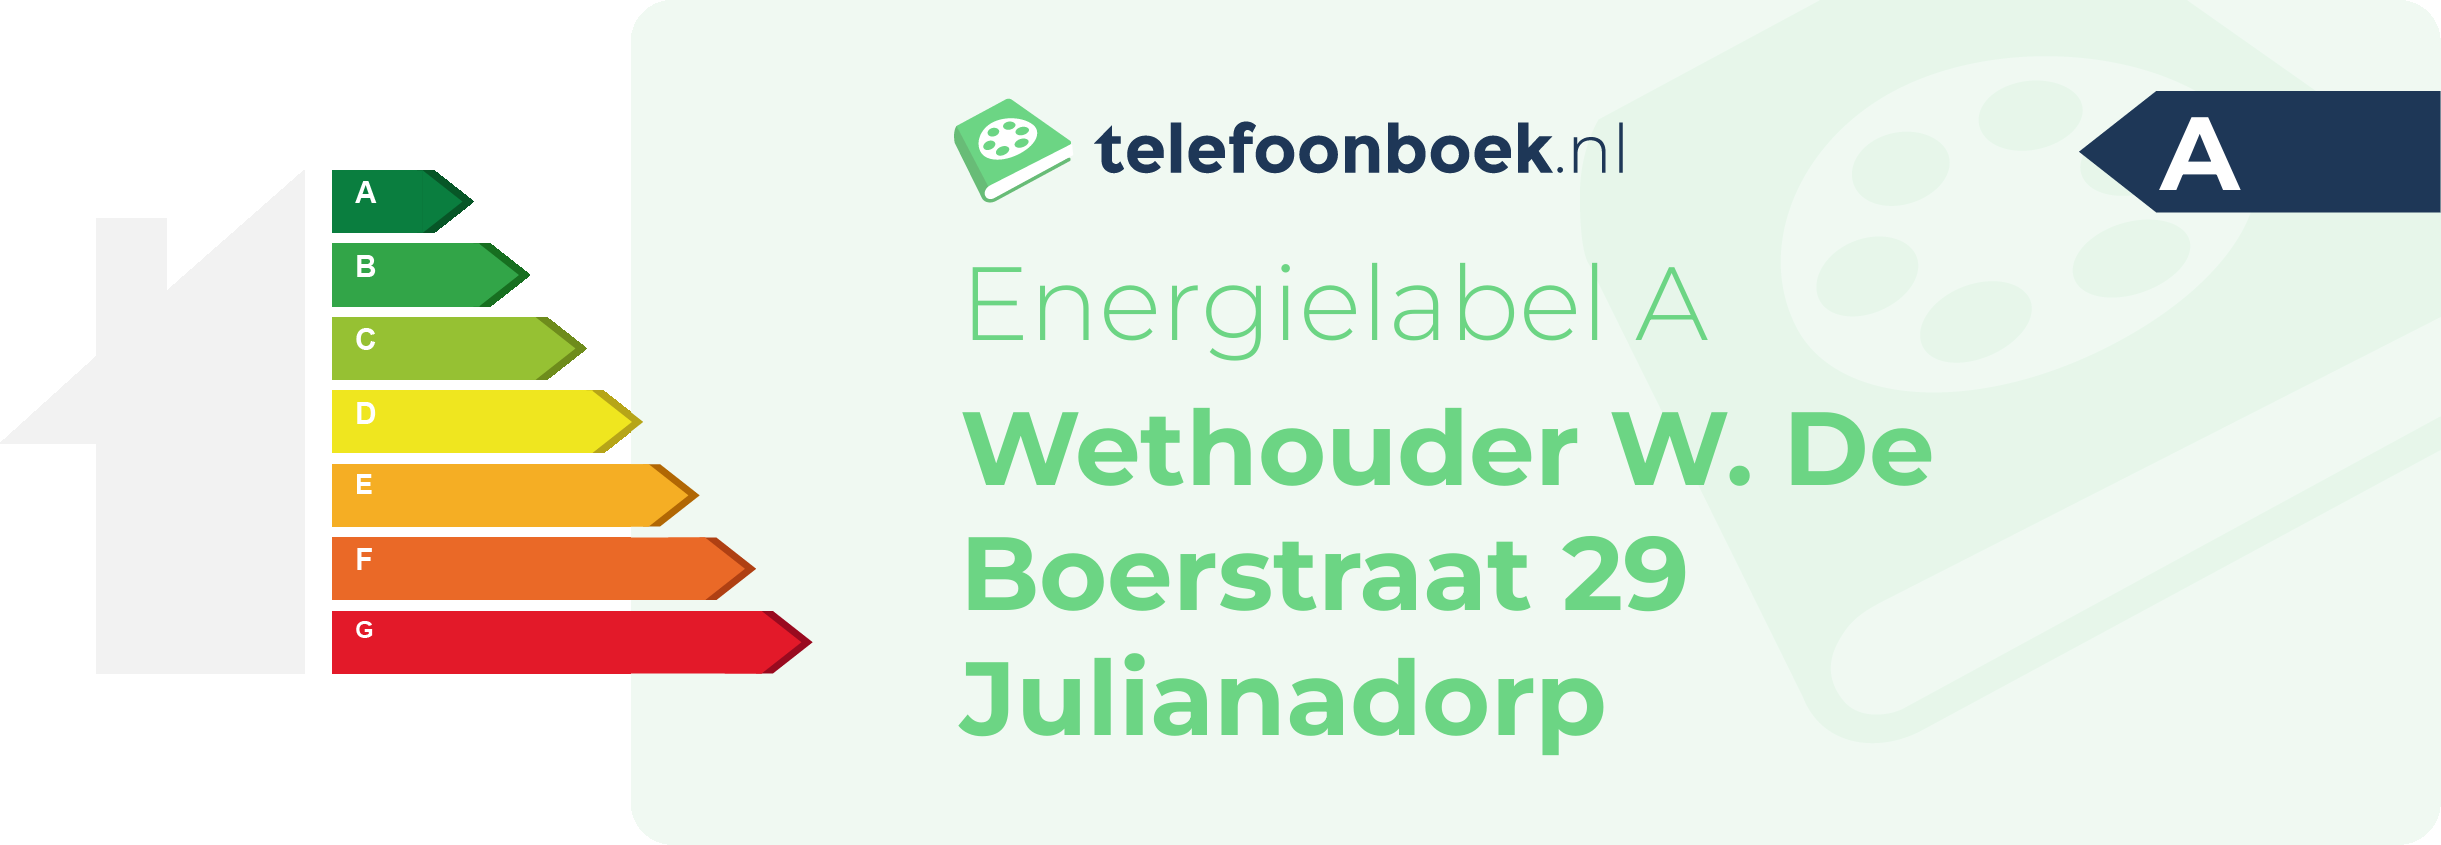 Energielabel Wethouder W. De Boerstraat 29 Julianadorp